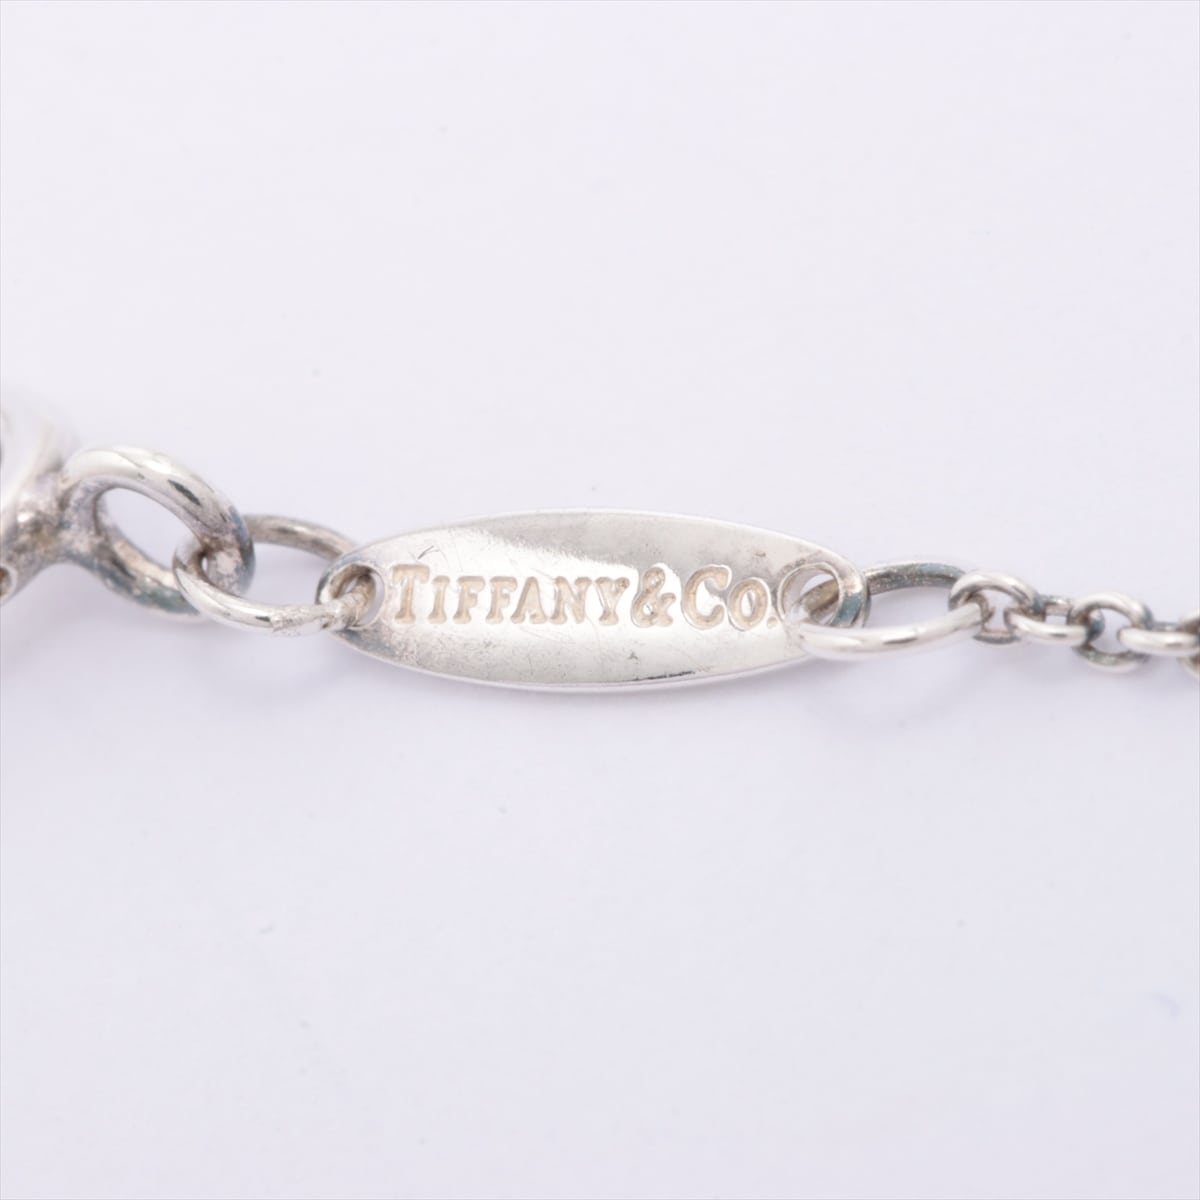 Tiffany Tiffany & Co. Pearl Bye The yards open hearts Bracelet Ag925